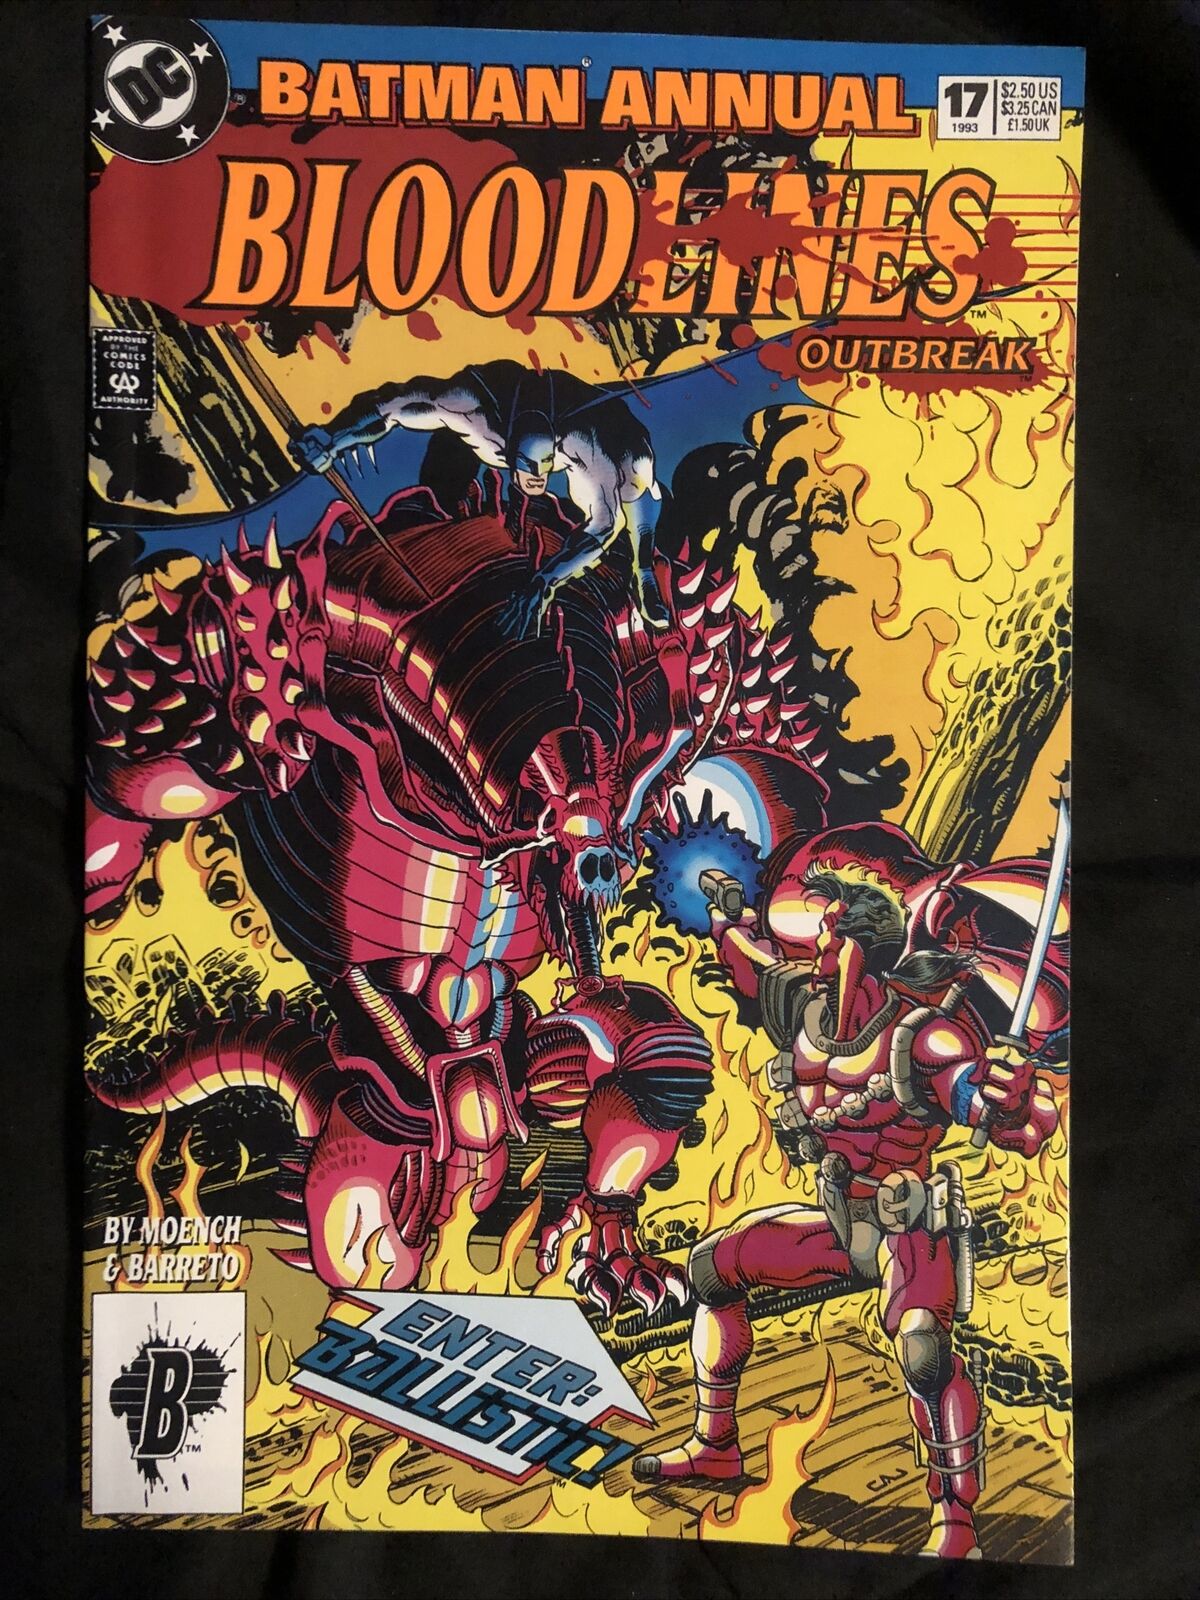 DC 1993 BATMAN ANNUAL BLOODLINES OUTBREAK#17